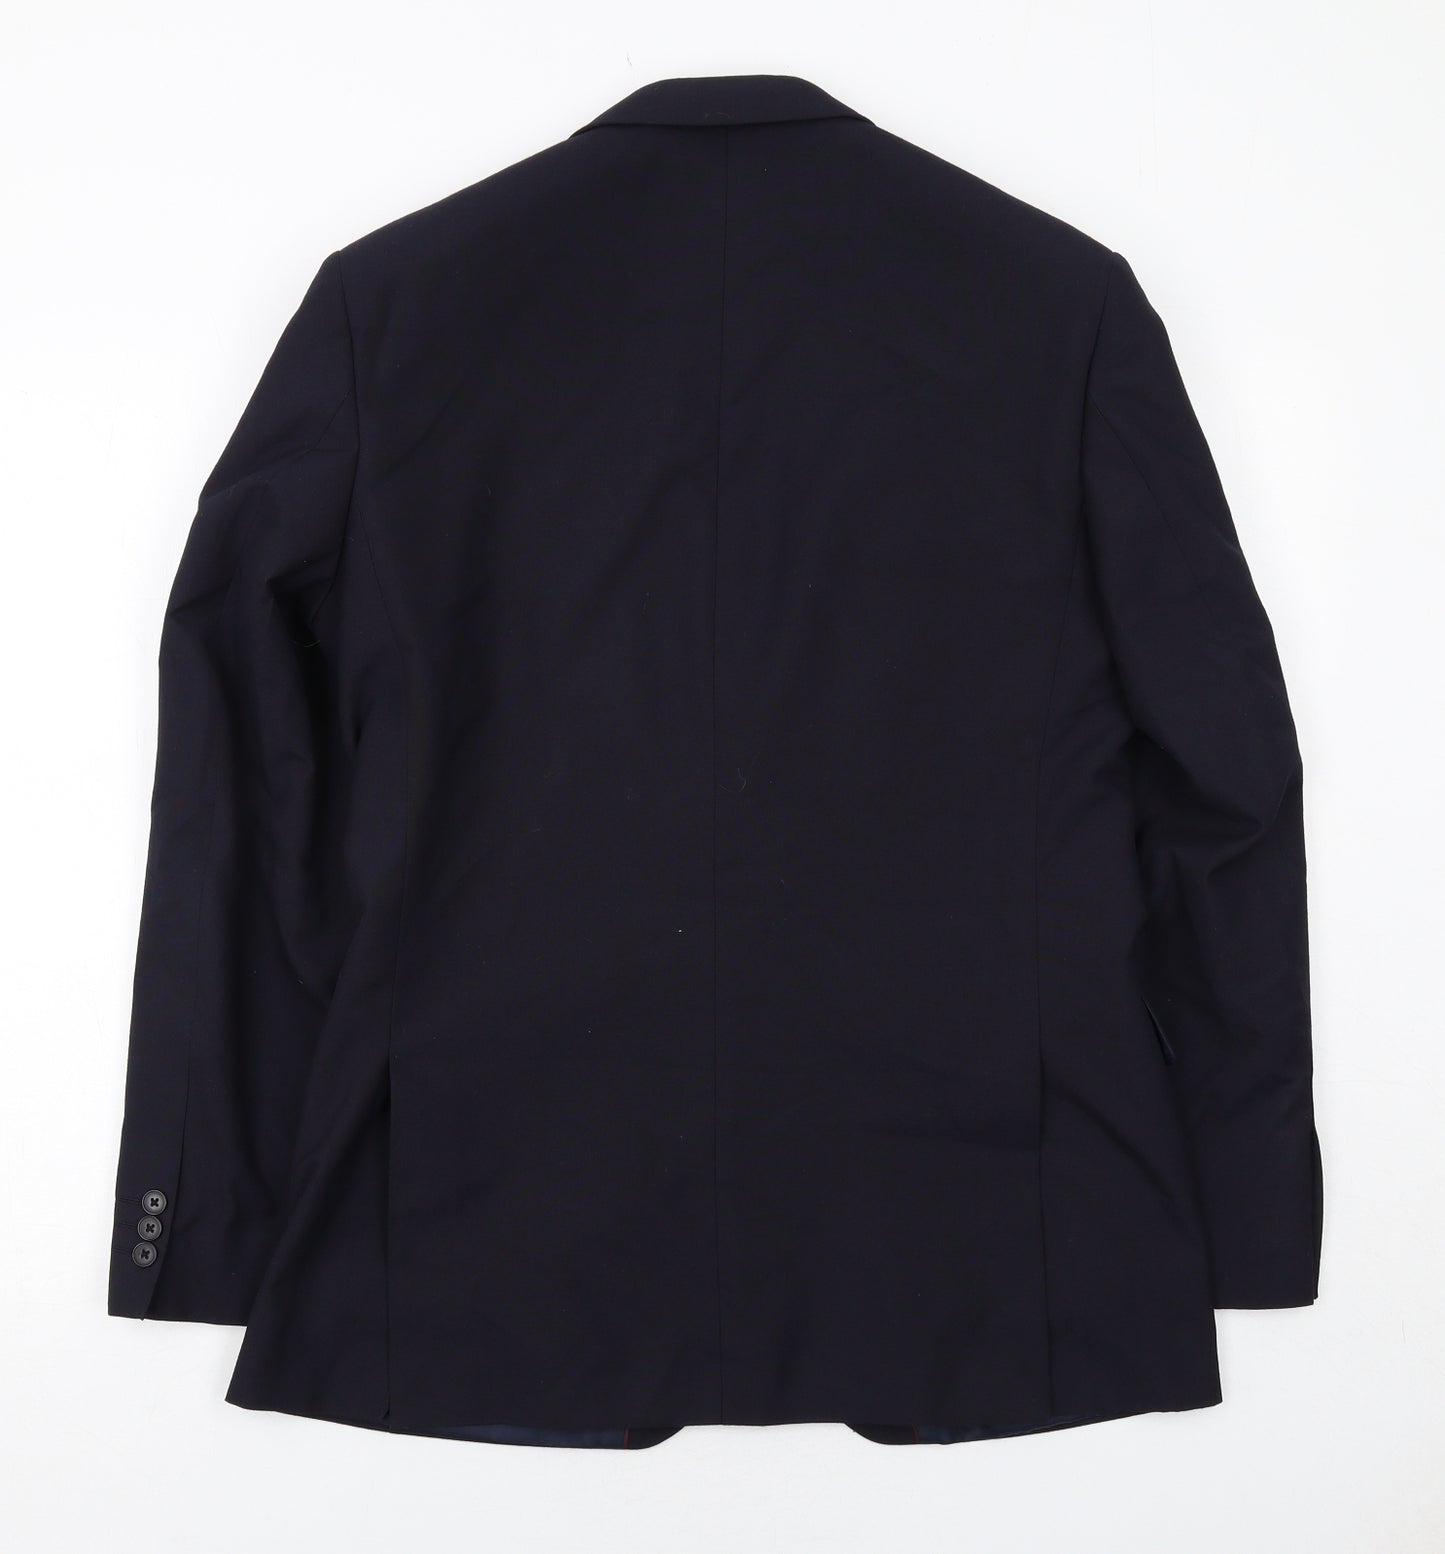 Debenhams Mens Blue Polyester Jacket Suit Jacket Size 38 Regular